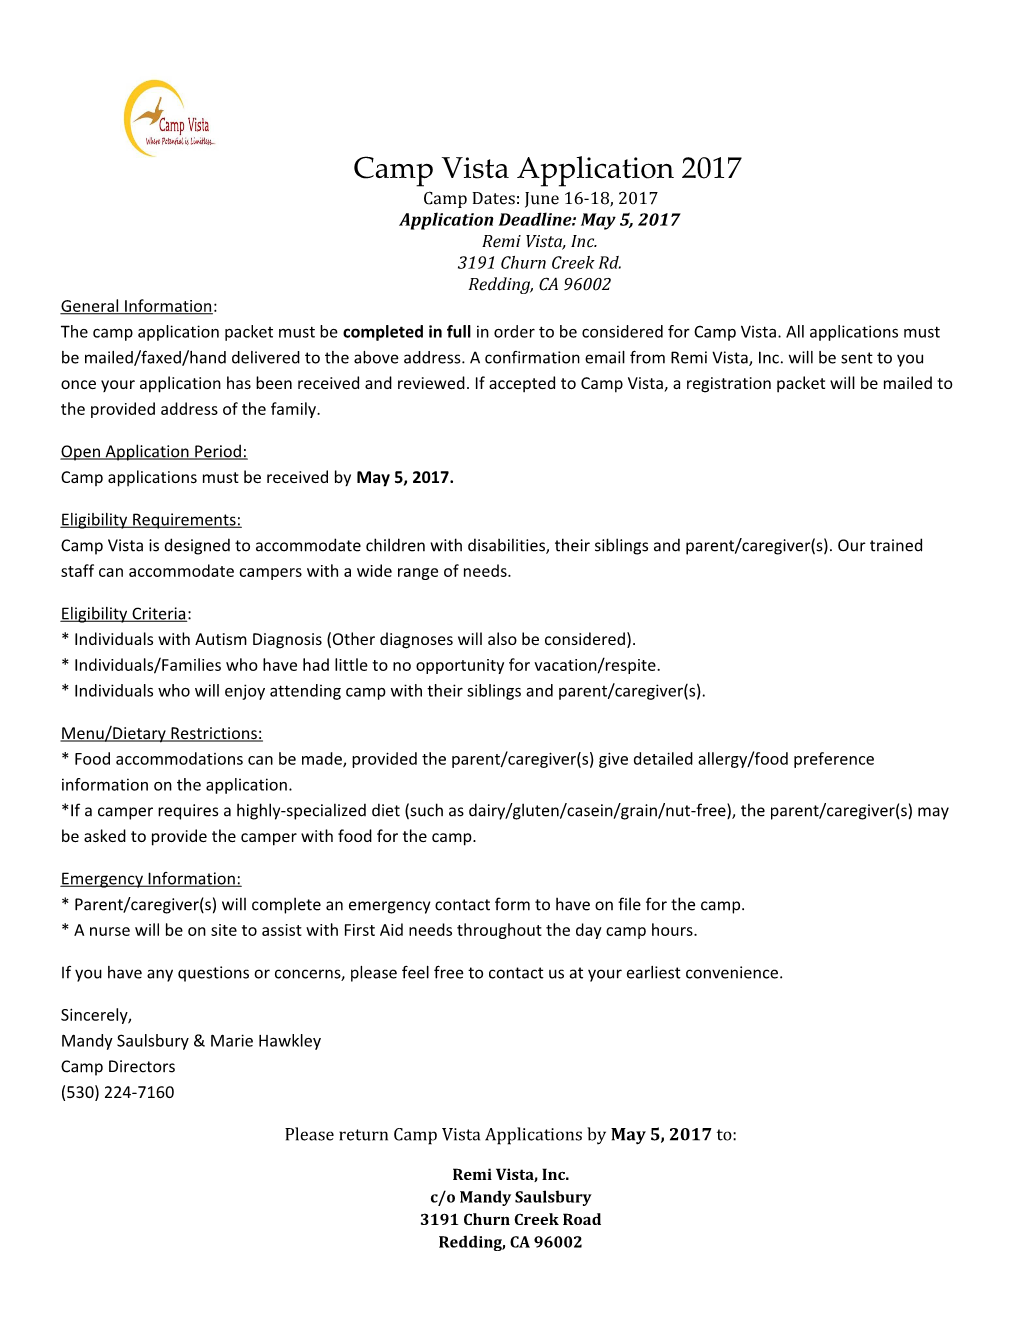 Application Deadline: May 5, 2017